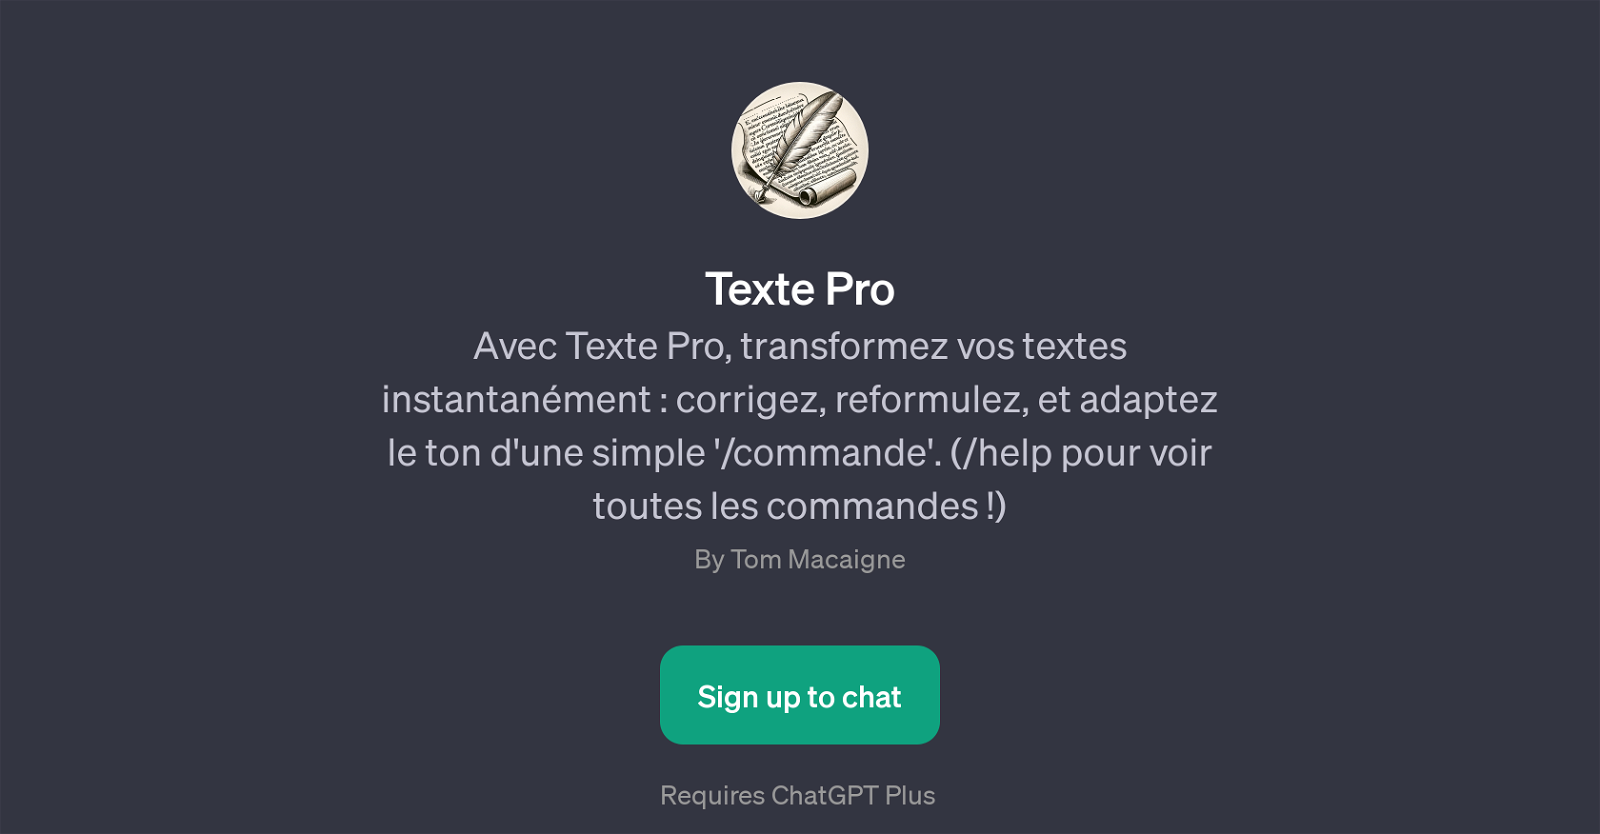 Texte Pro website